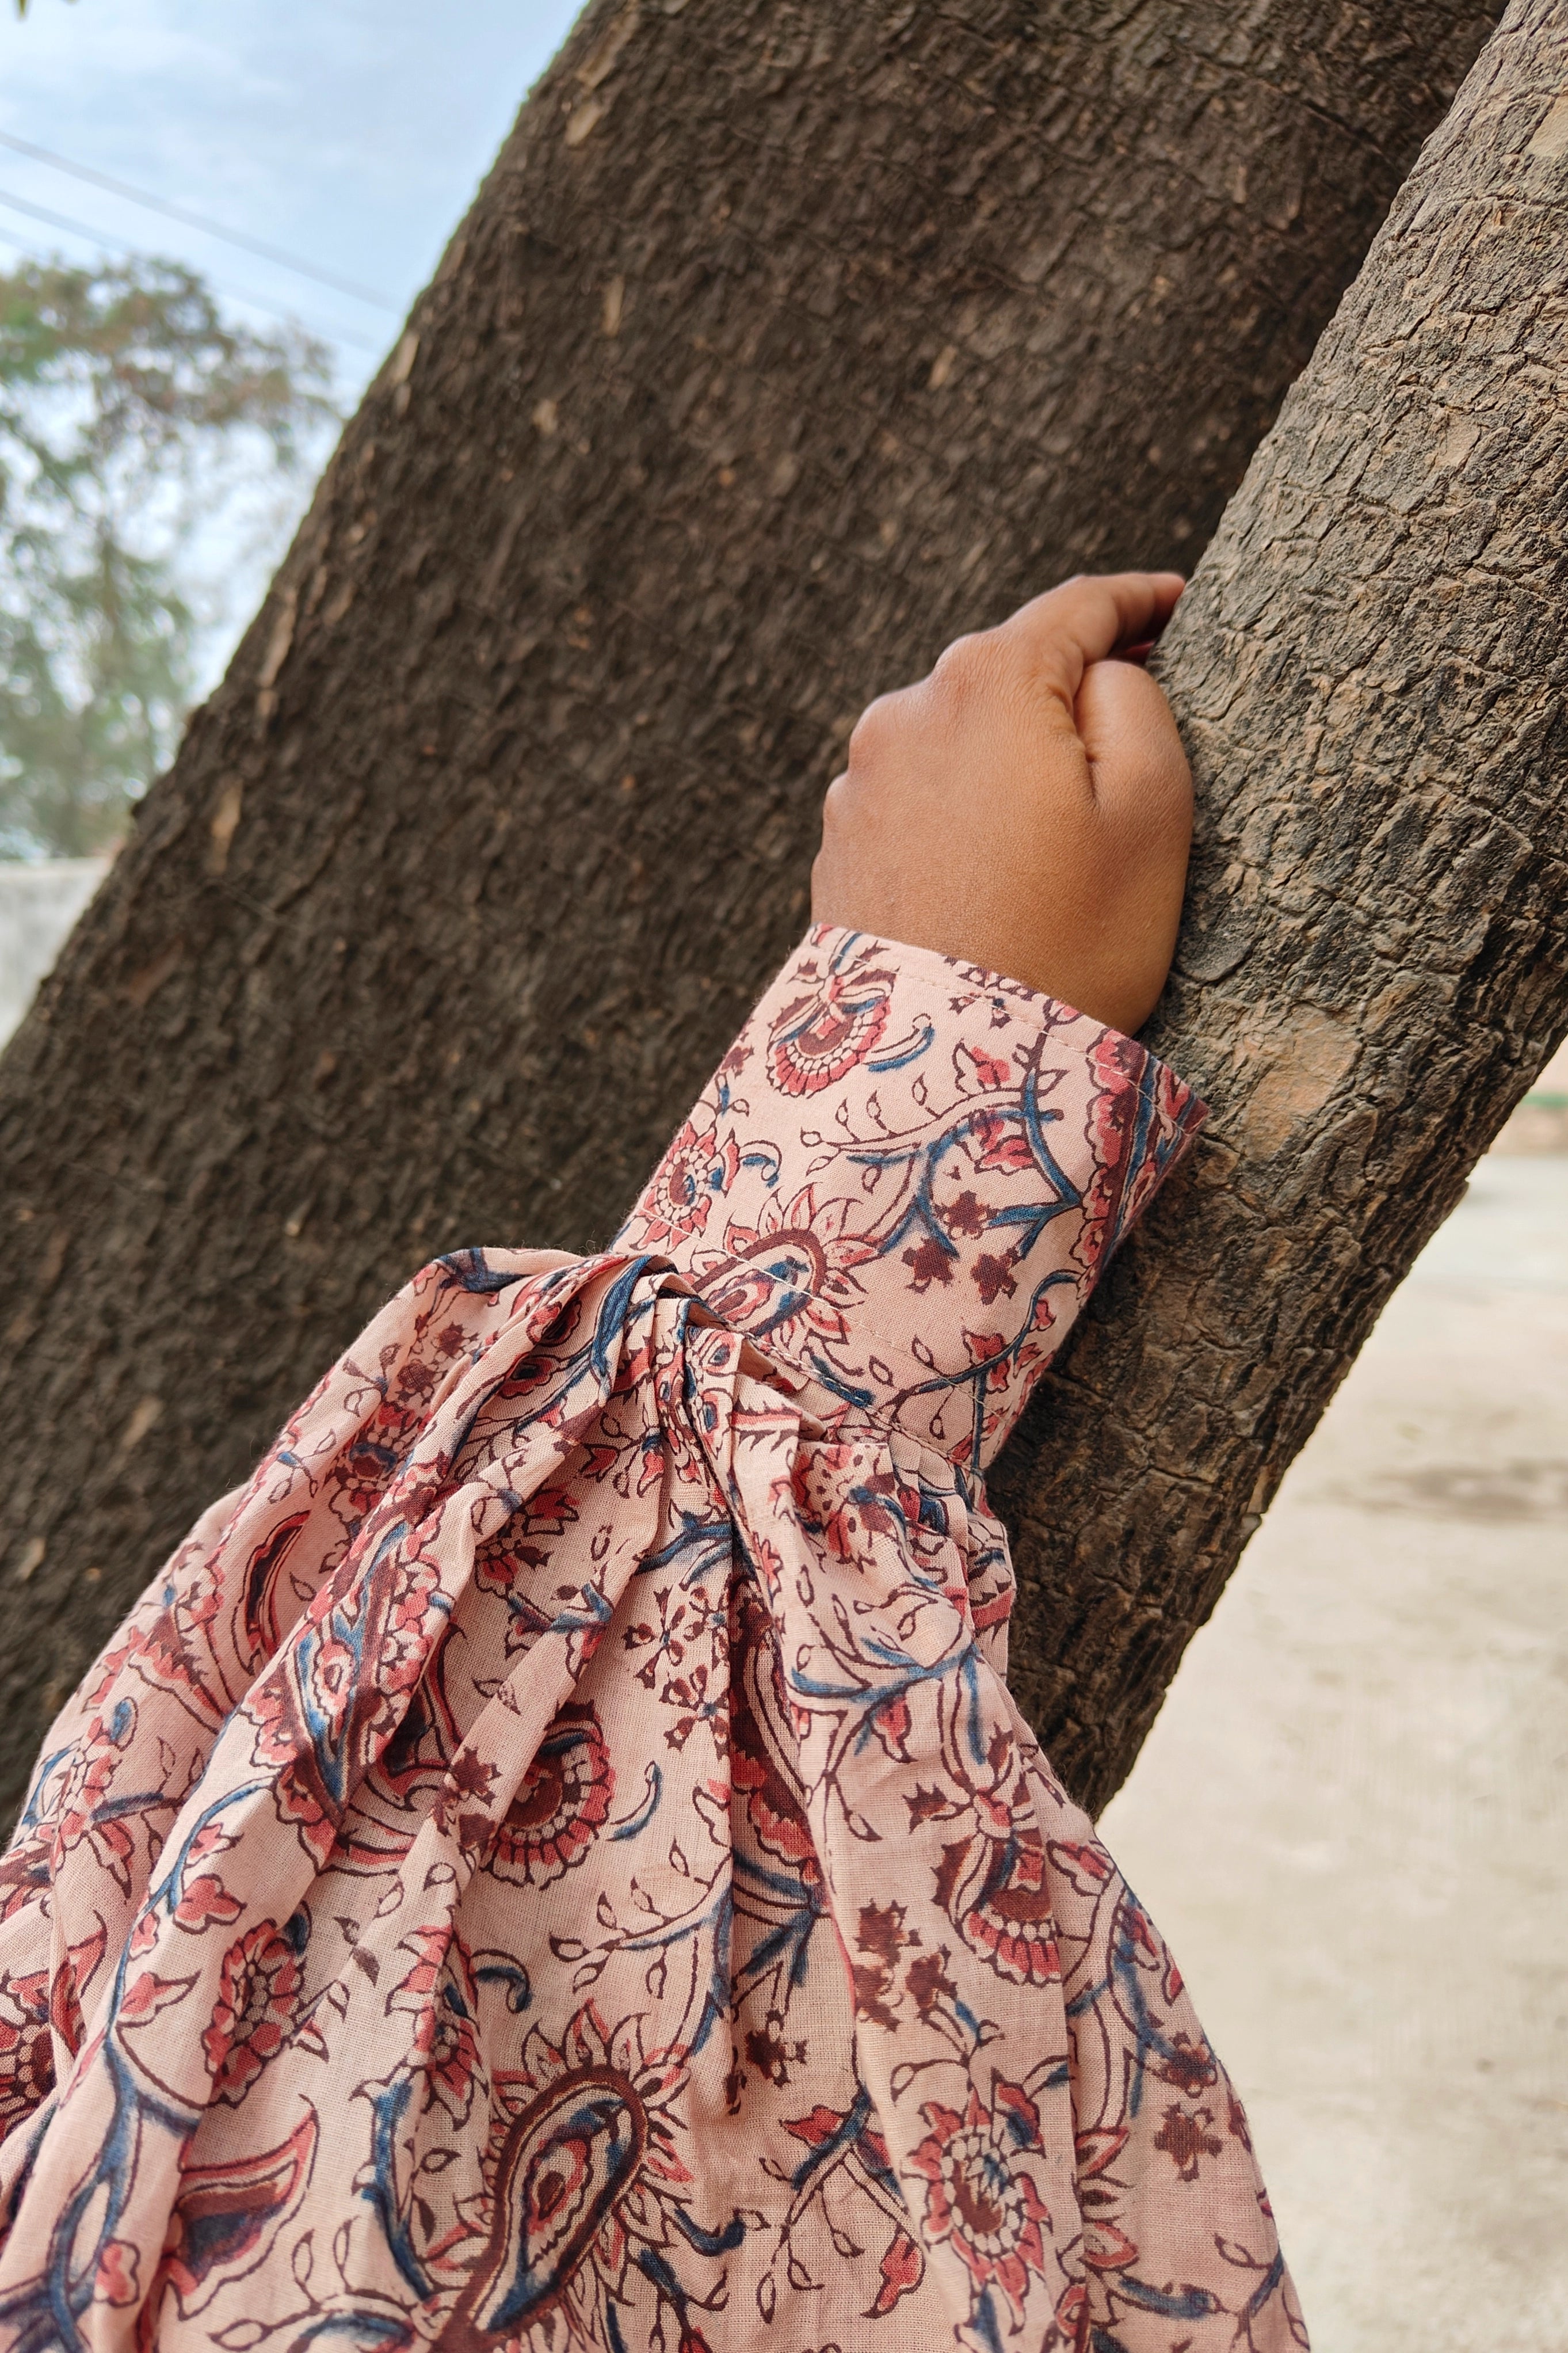 Ilamra hand block printed Kalamkari art organic cotton naturally dyed in deep indigo, madder red and rosy pink, puffy sleeves, elegant, classy, beautiful, bodycon dress